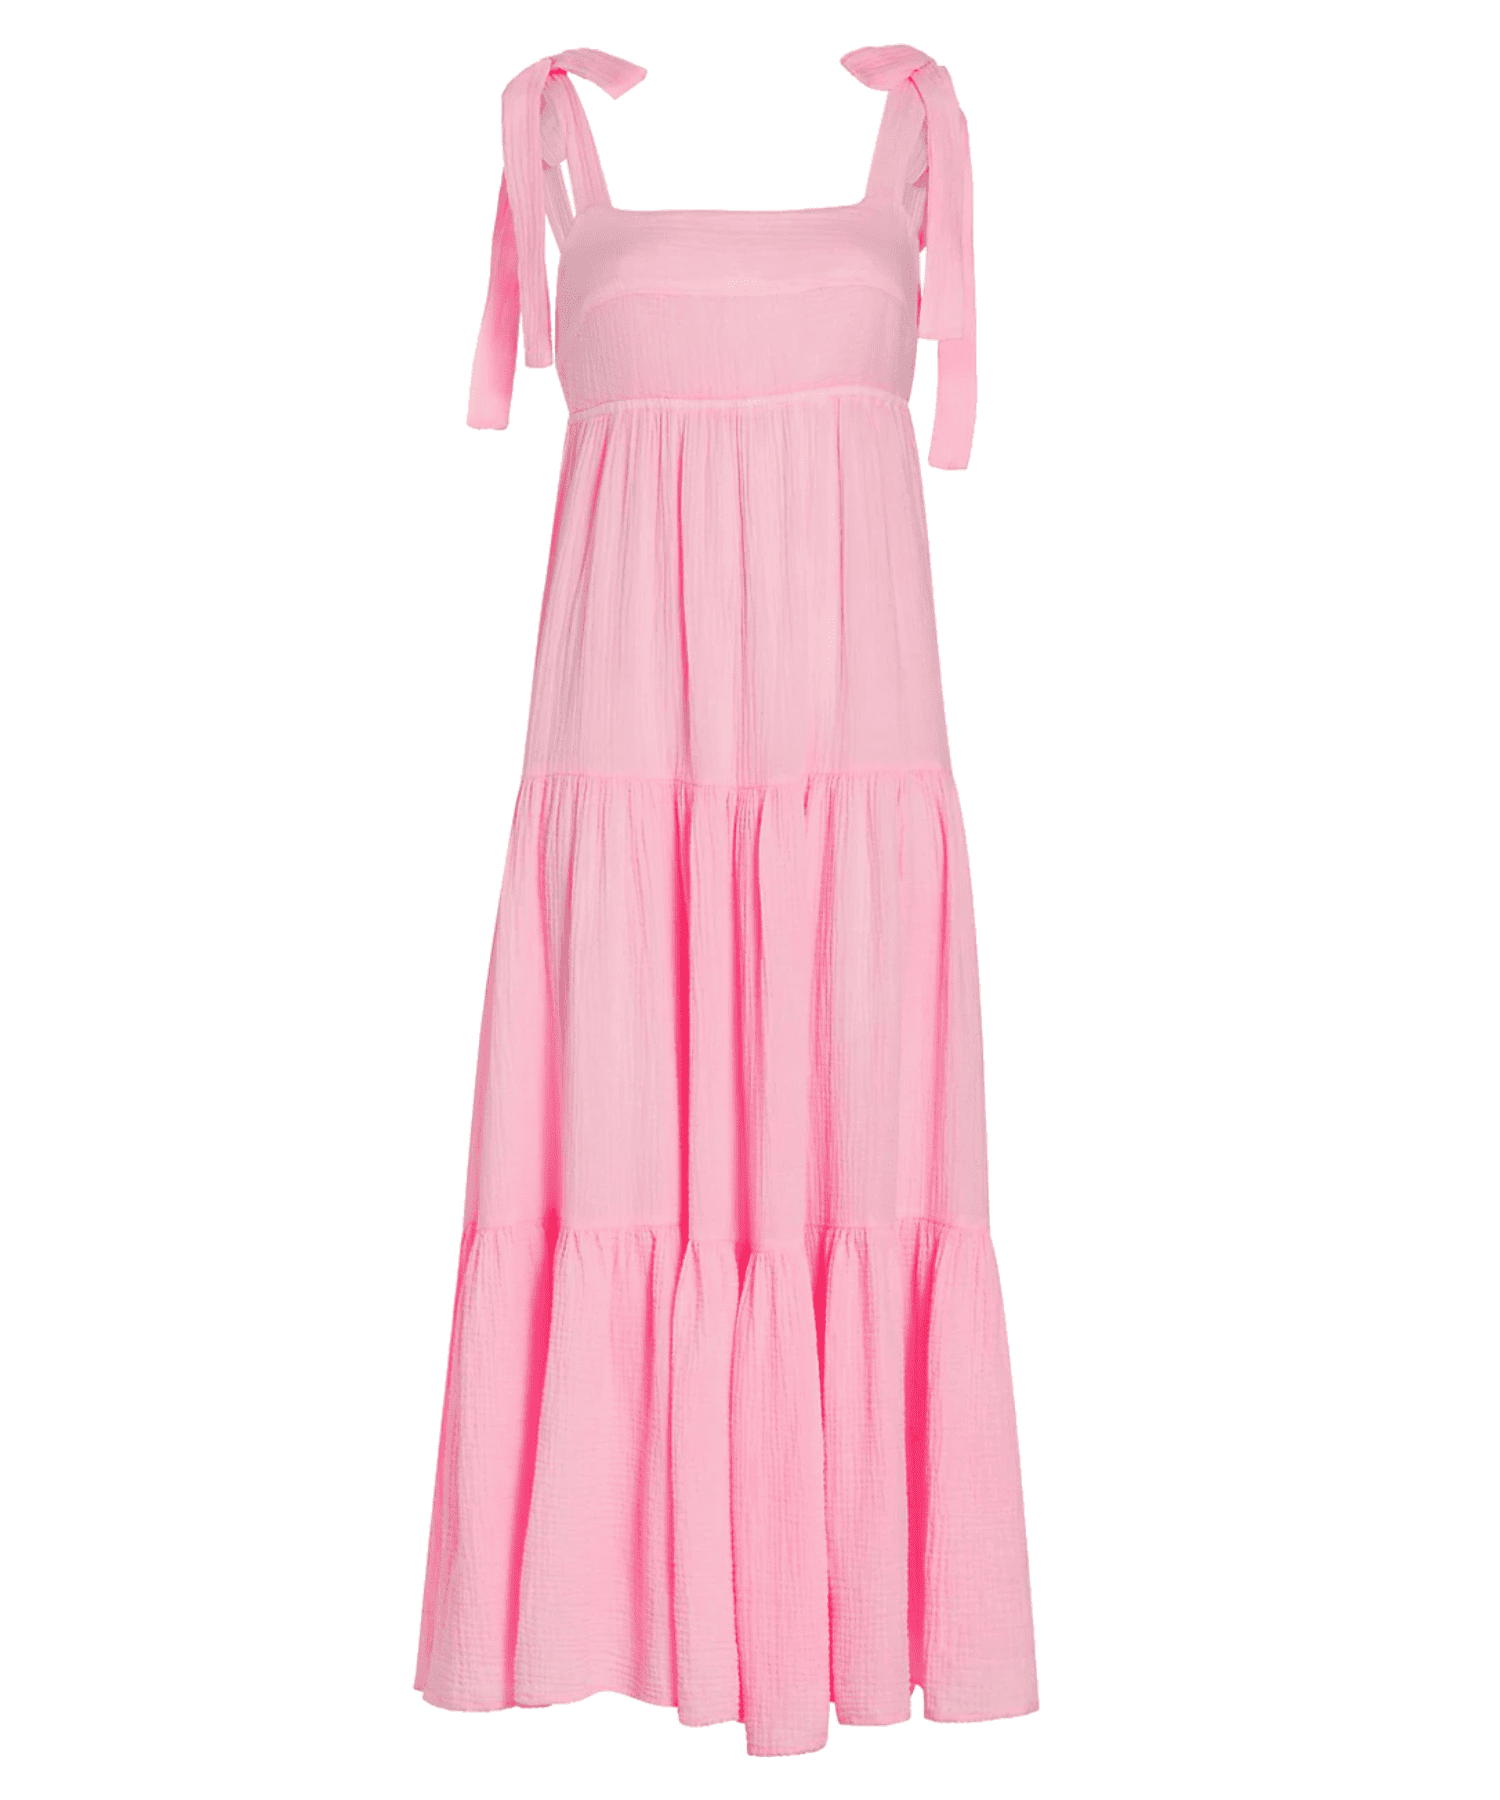 Honorine Sugar Pink Marguerite Dress